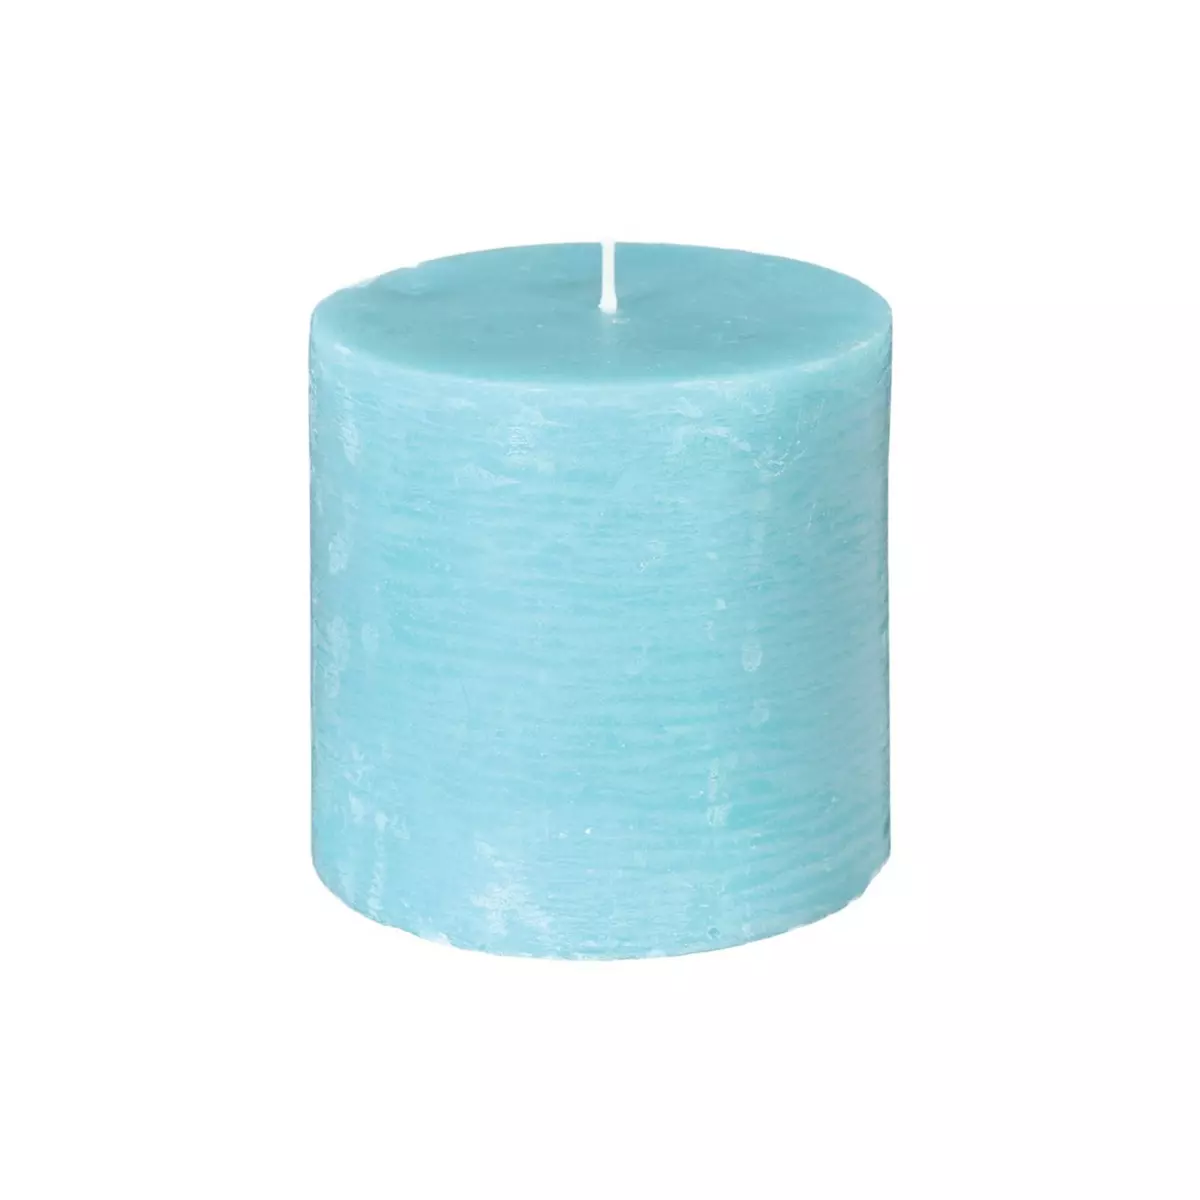 Comptoir des bougies Bougie ronde Rustic - Diam. 10 cm - Bleu